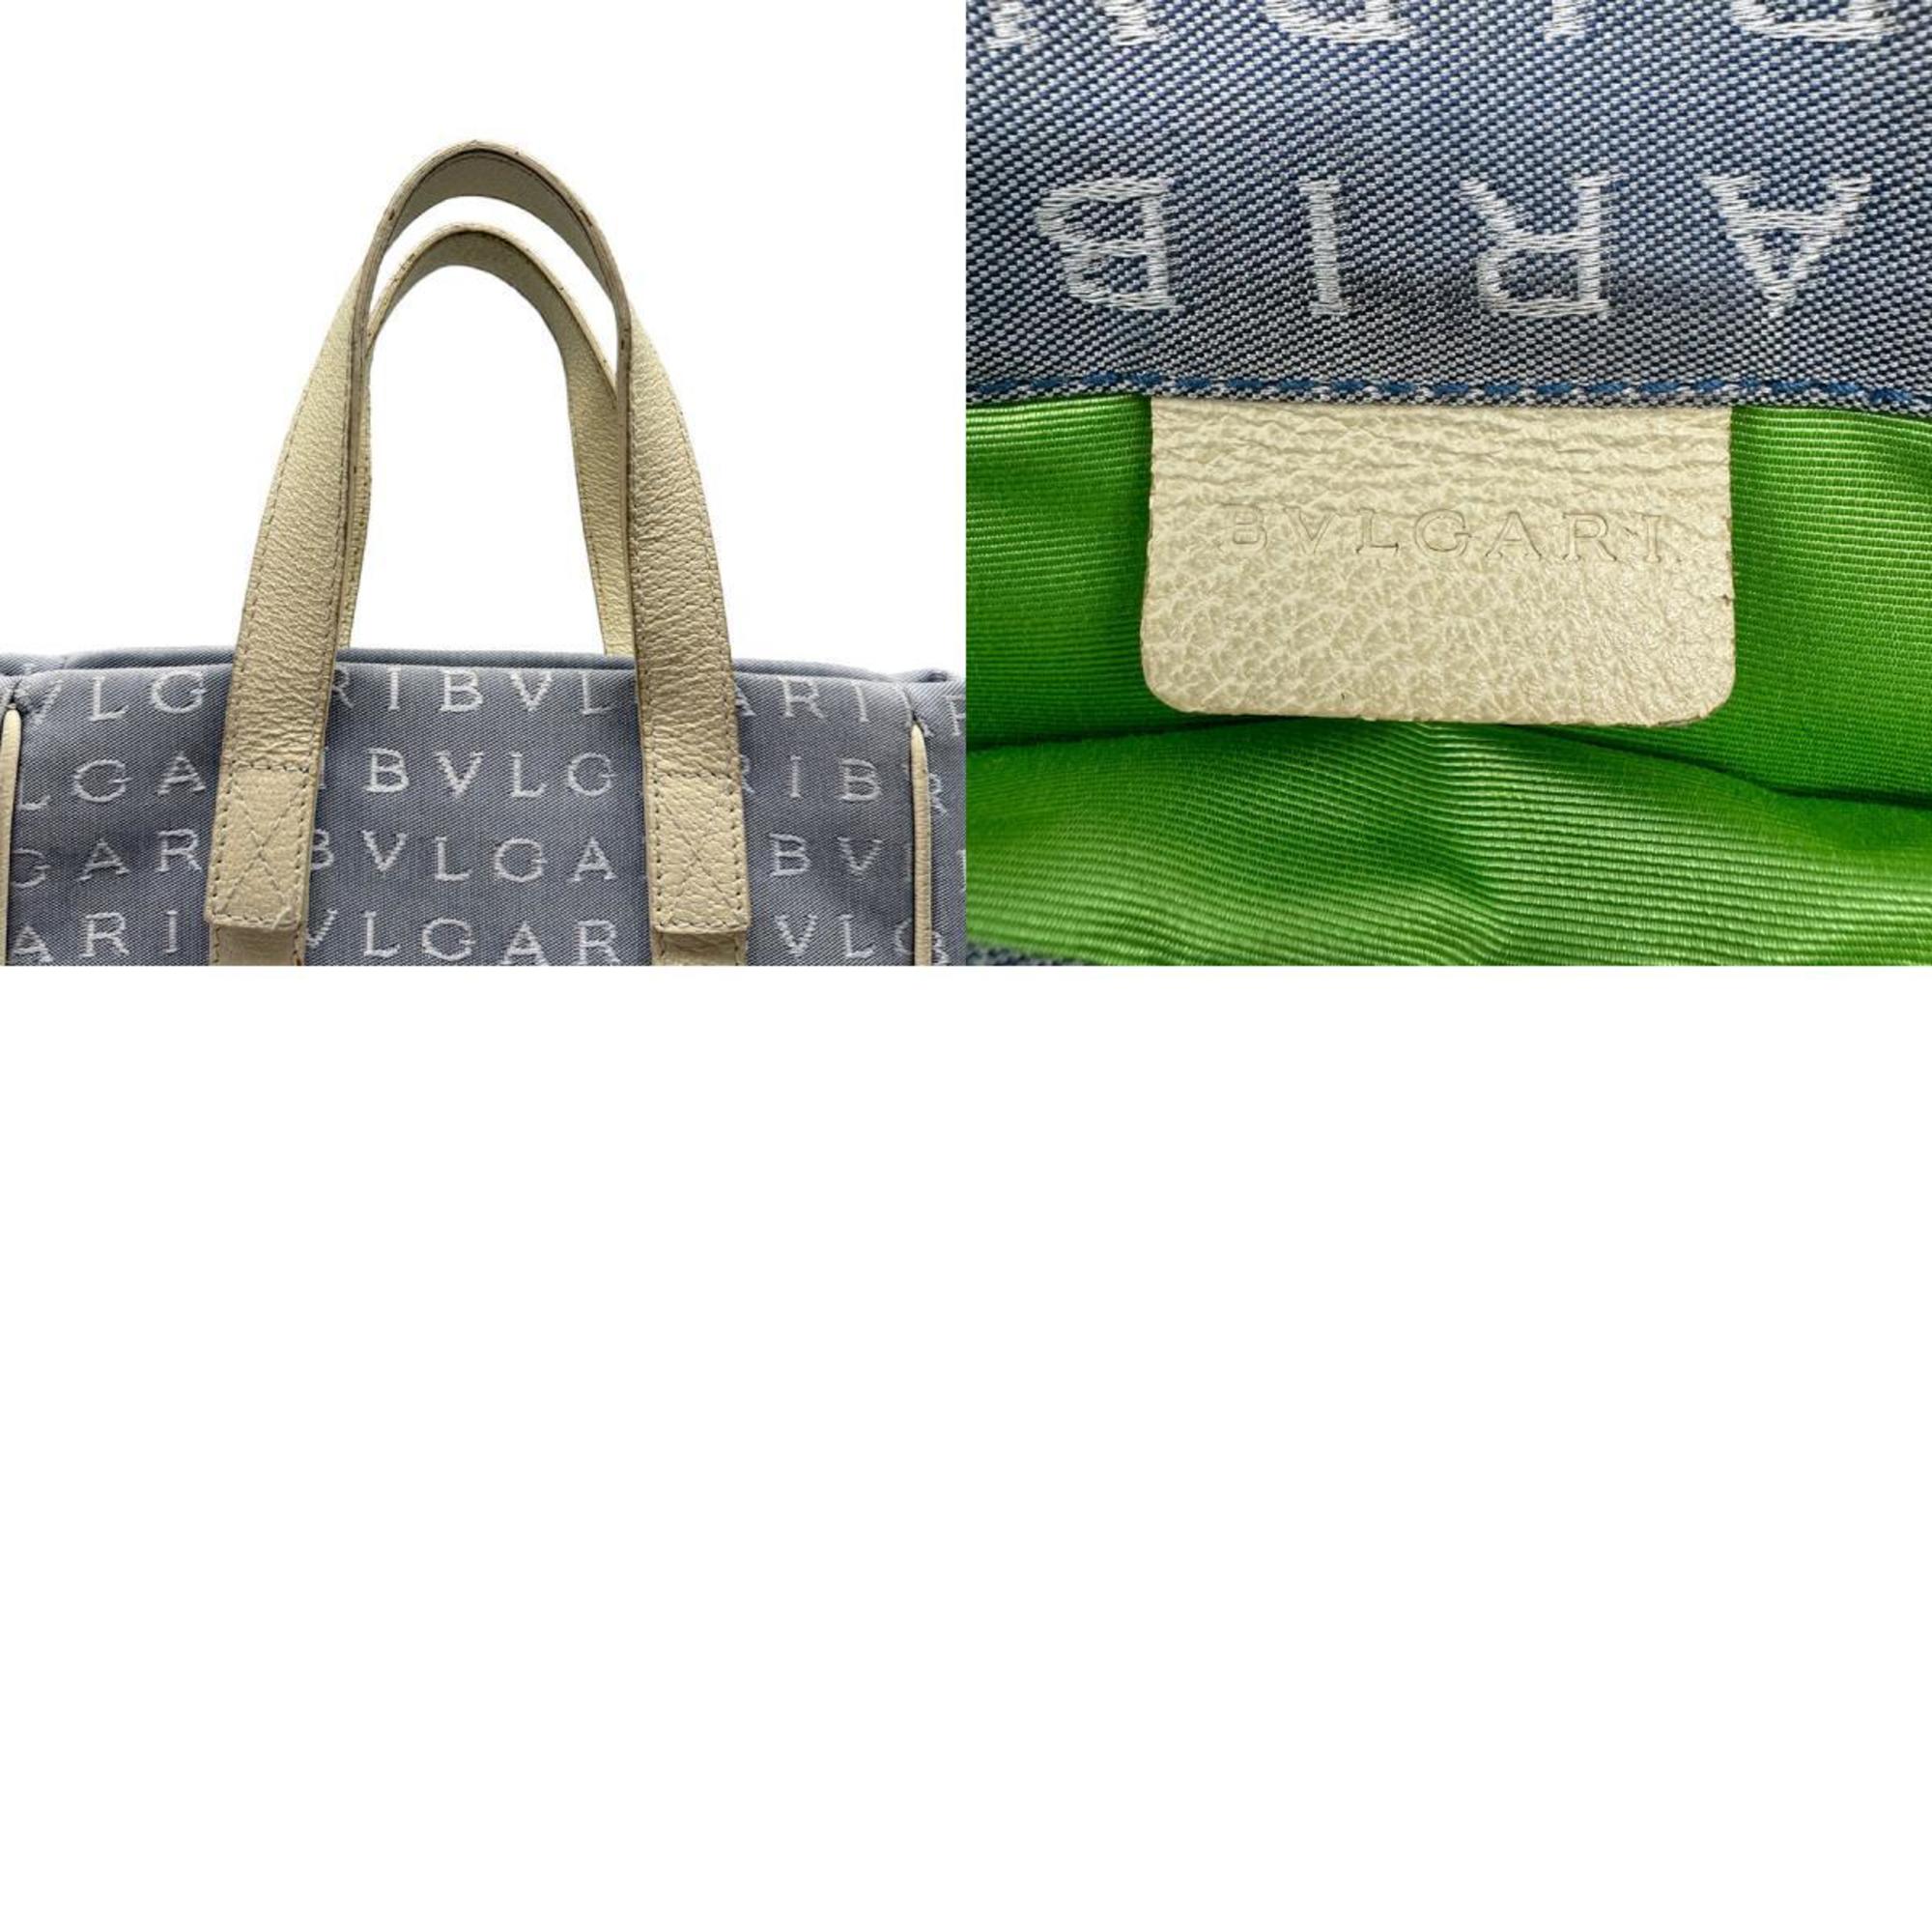 BVLGARI Handbag Canvas/Leather Light Blue x Ivory Unisex z0407